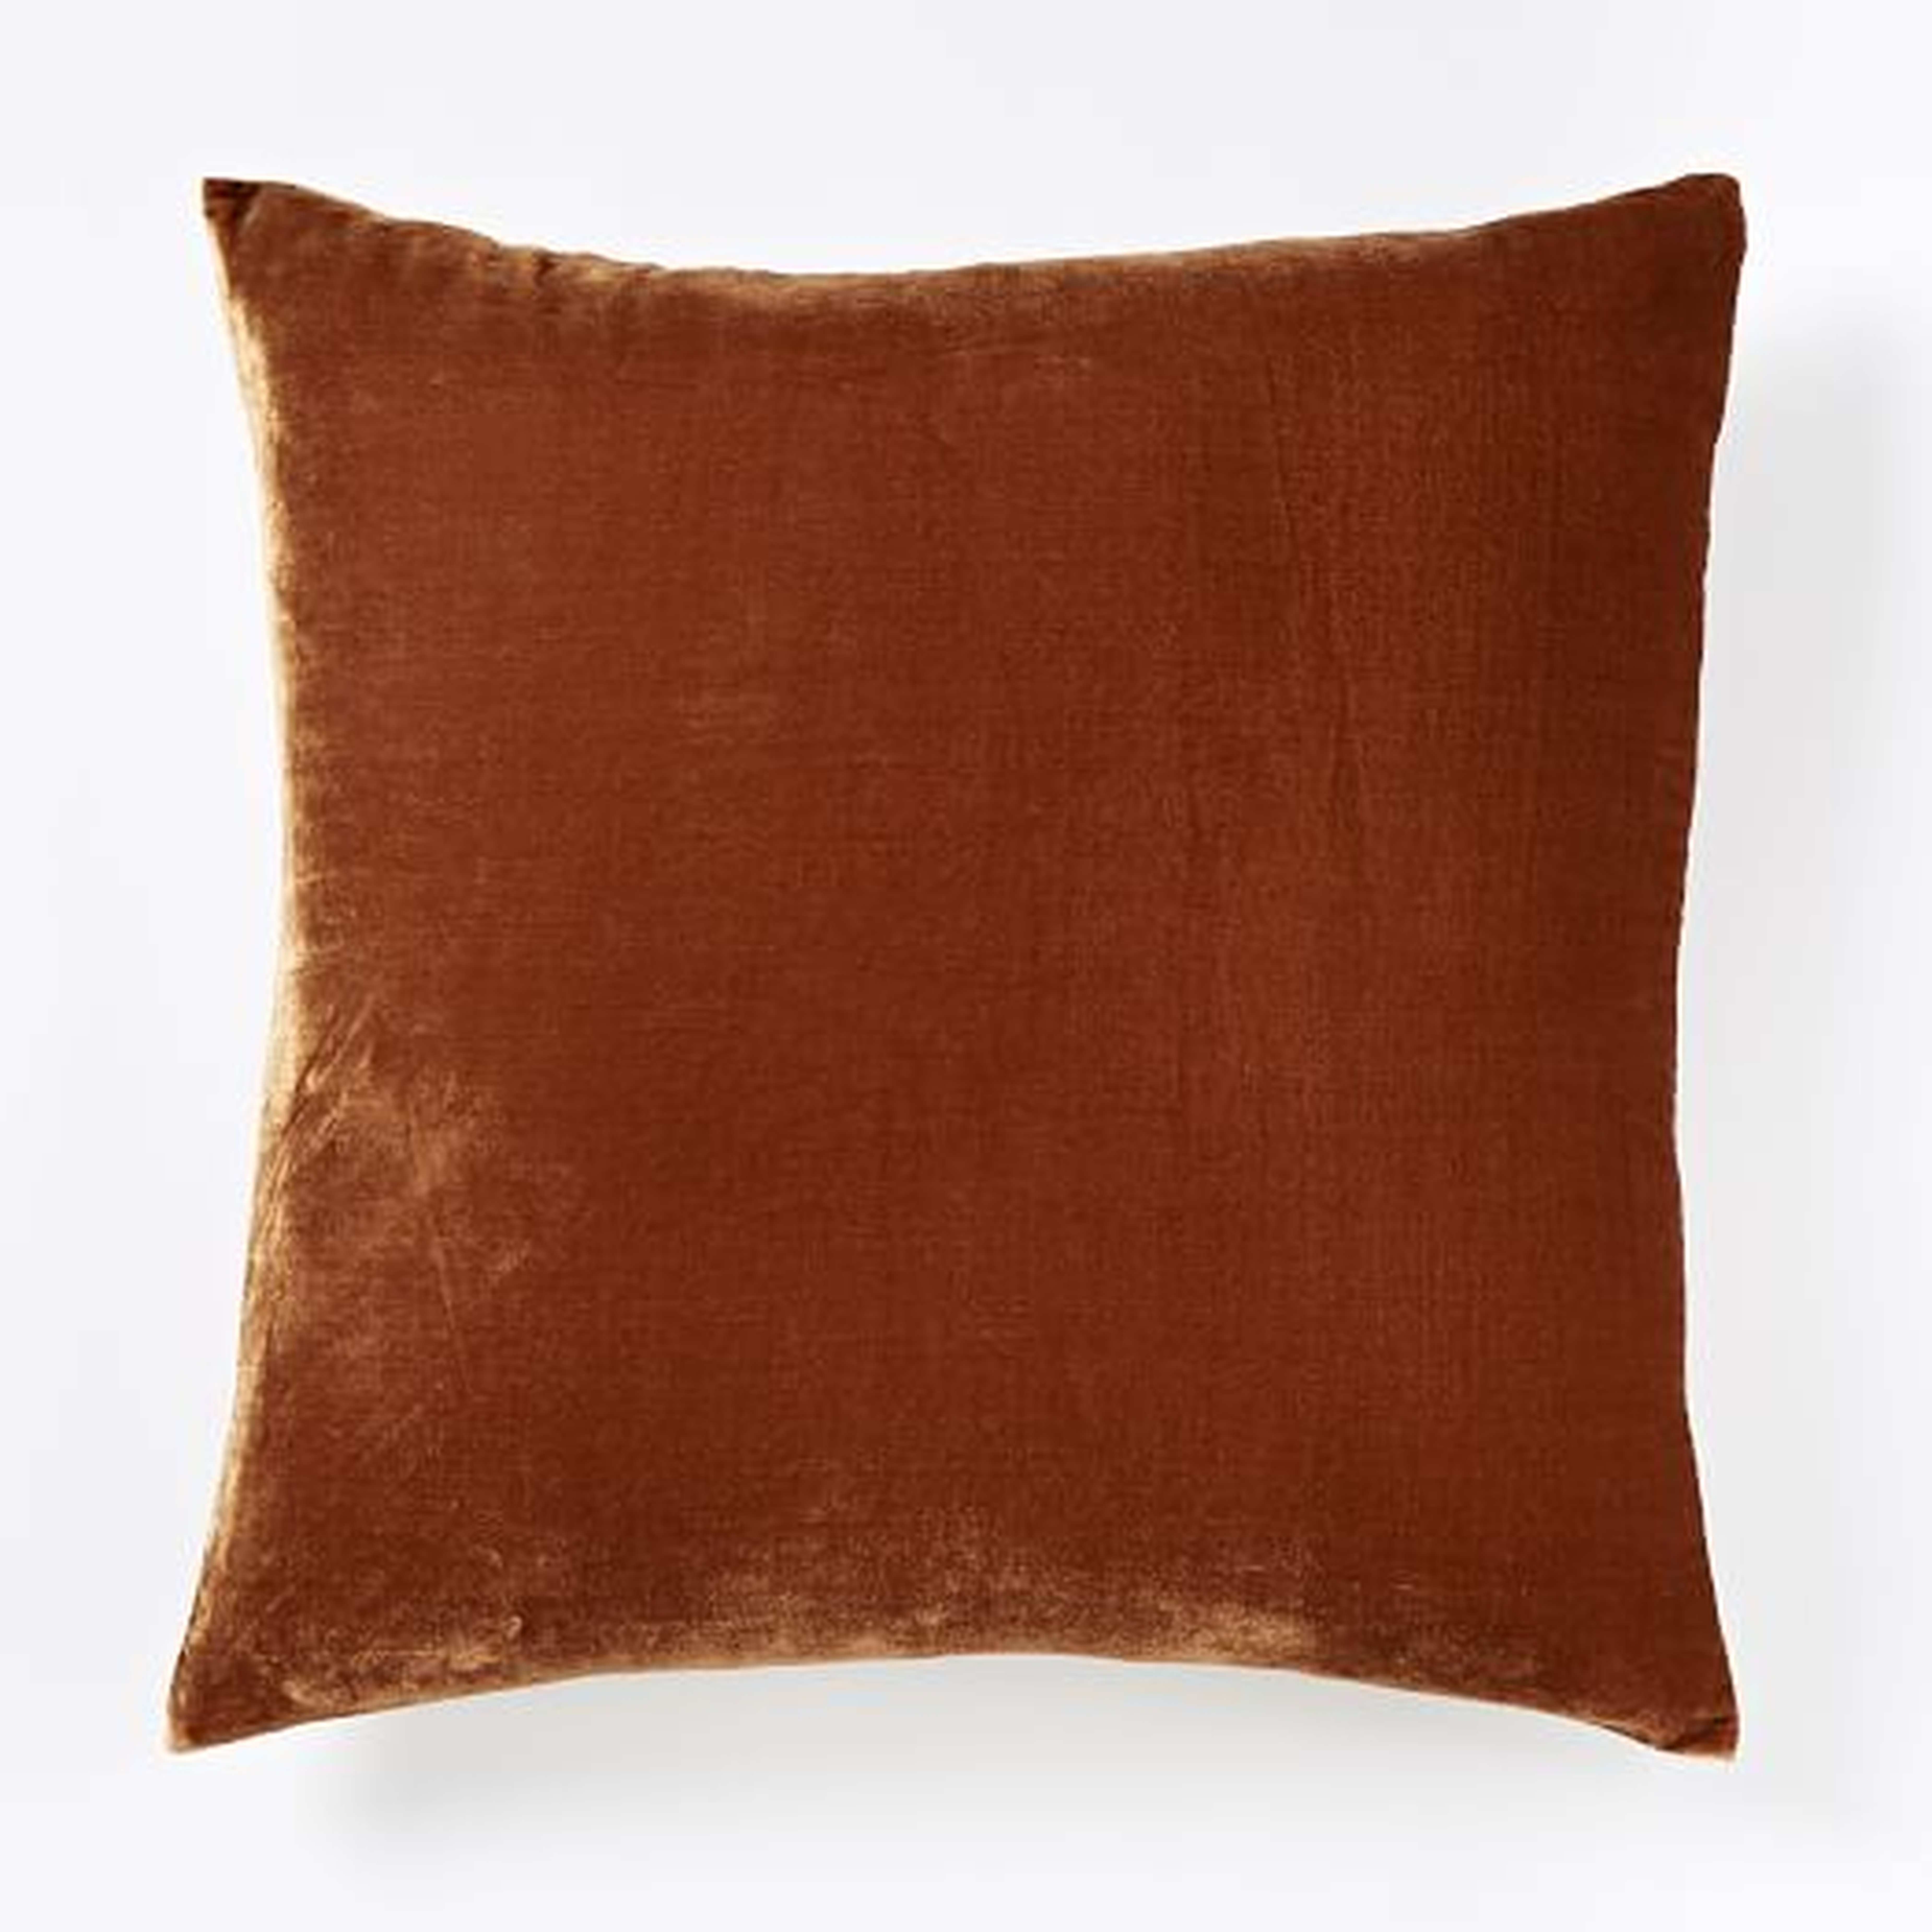 Luxe Velvet Square Pillow Cover - Copper - West Elm